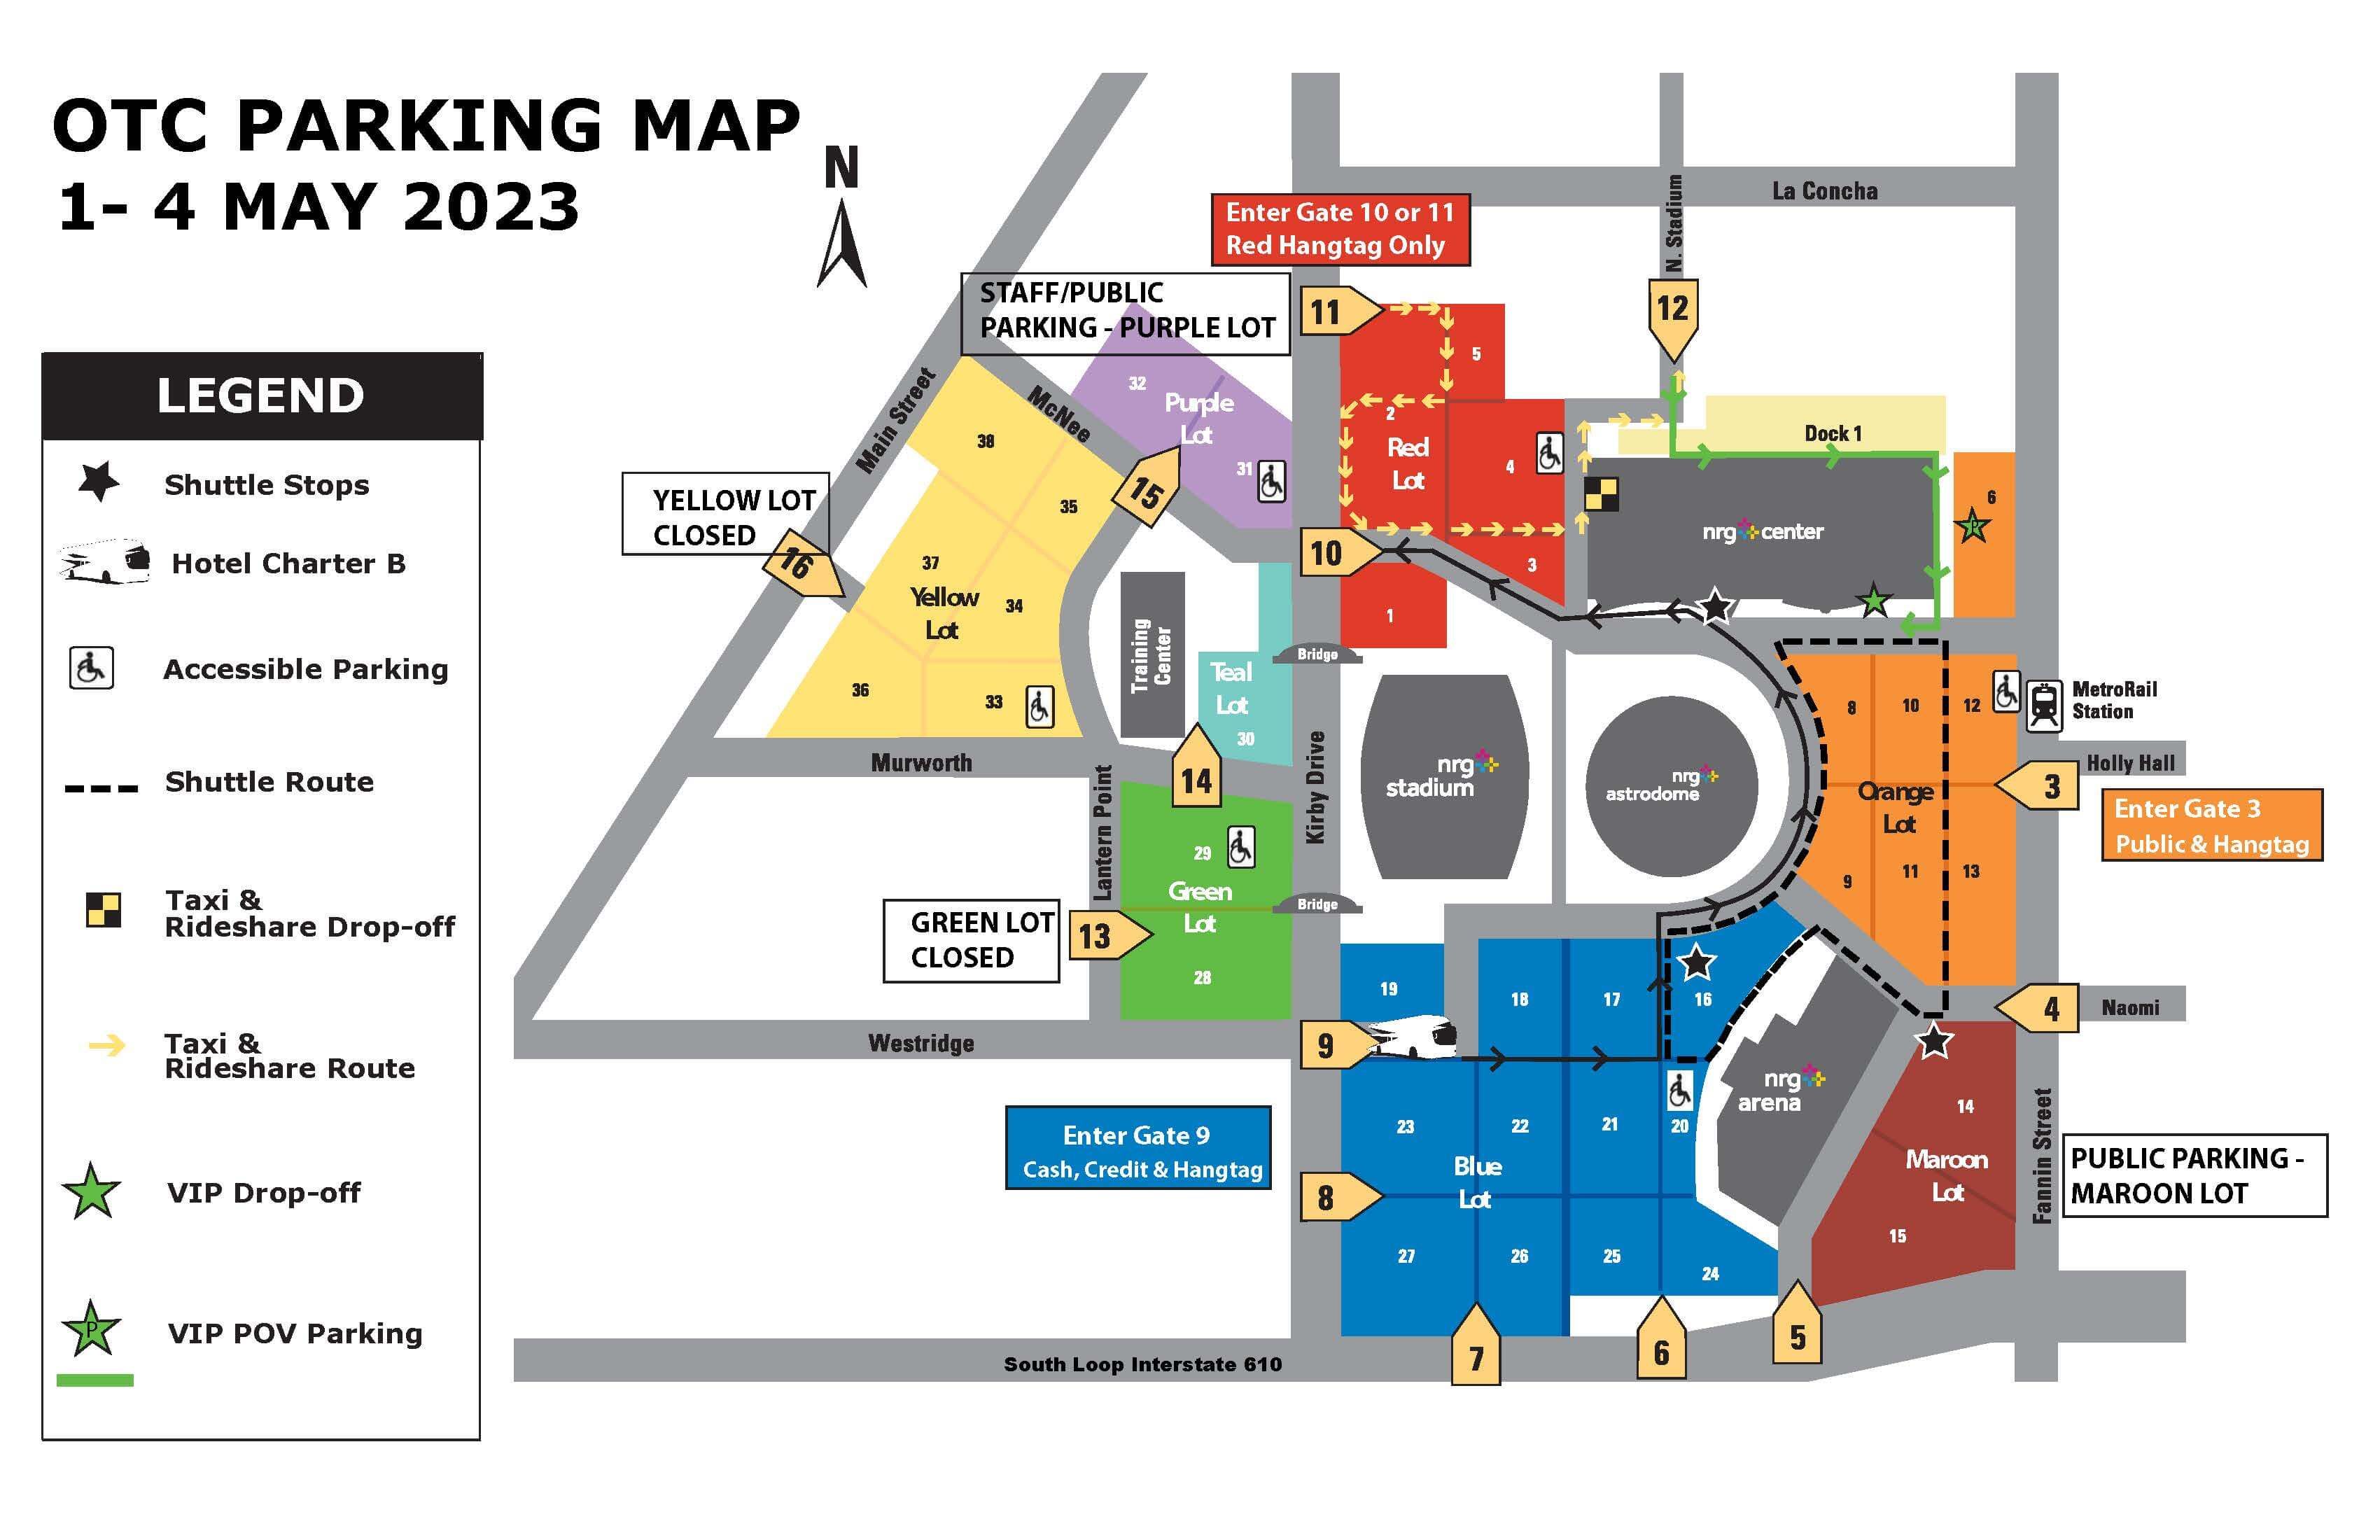 NRG Parking Map